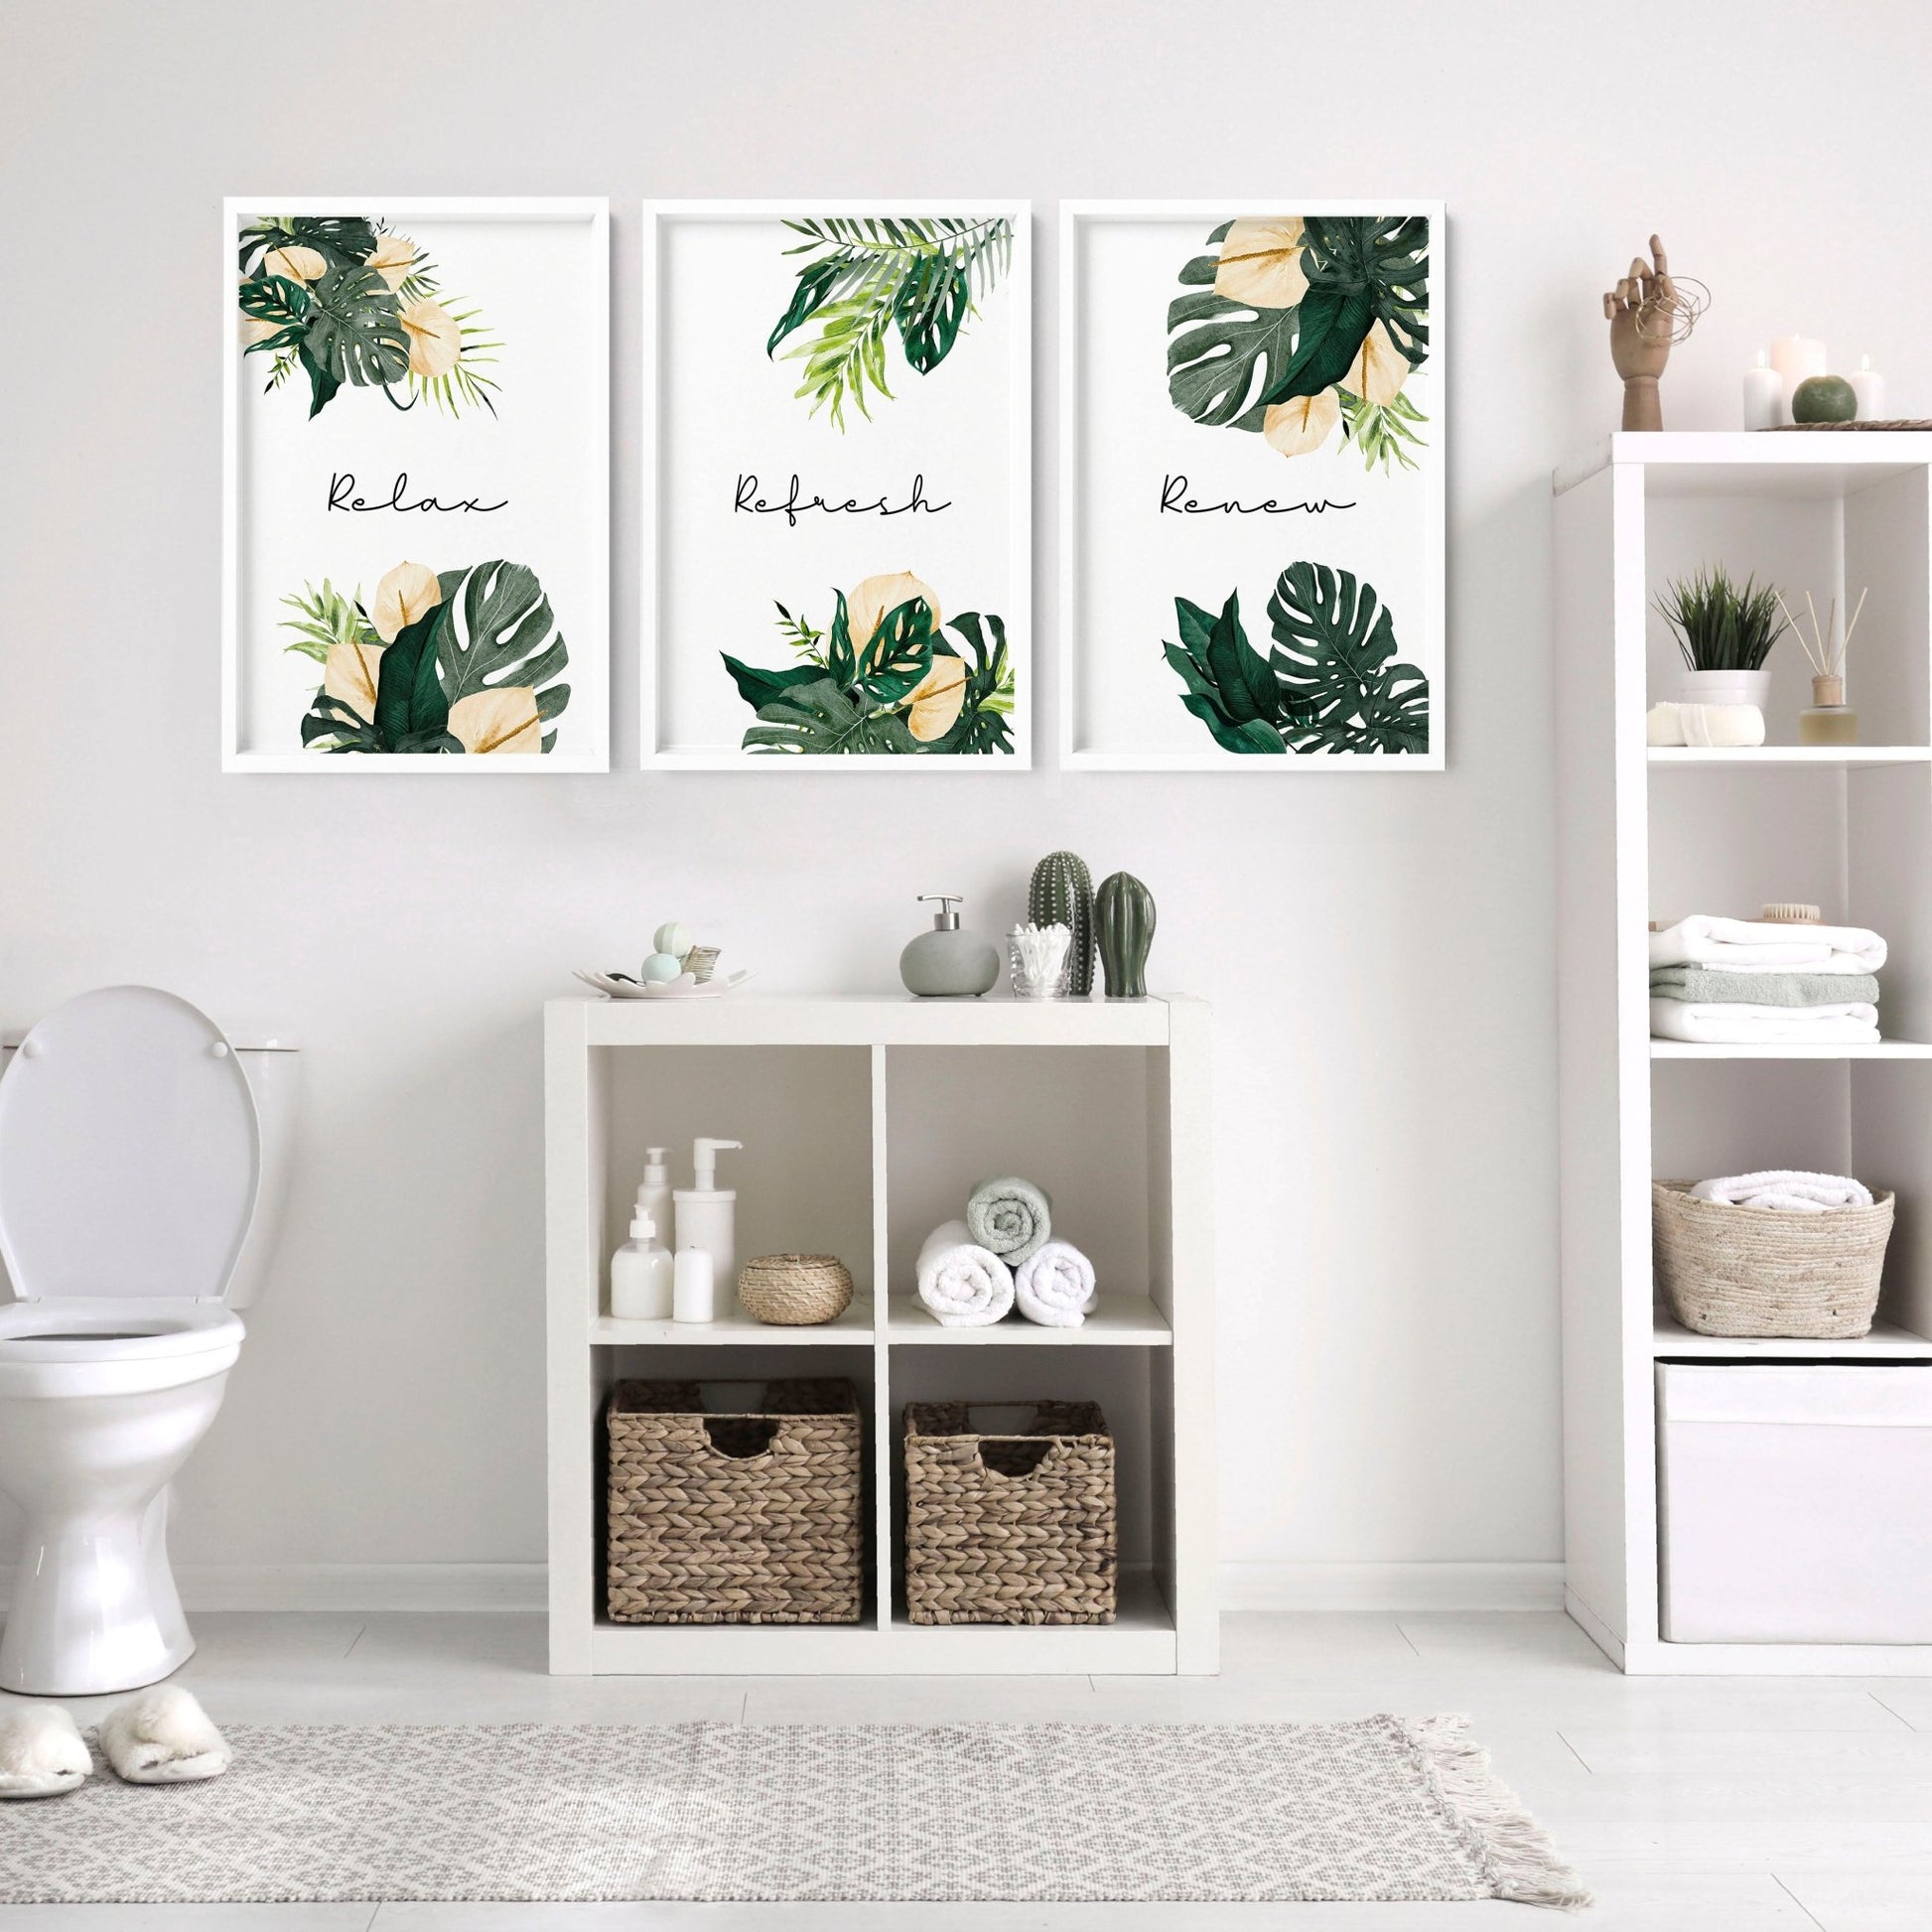 Art prints for the bathroom | set of 3 wall art prints